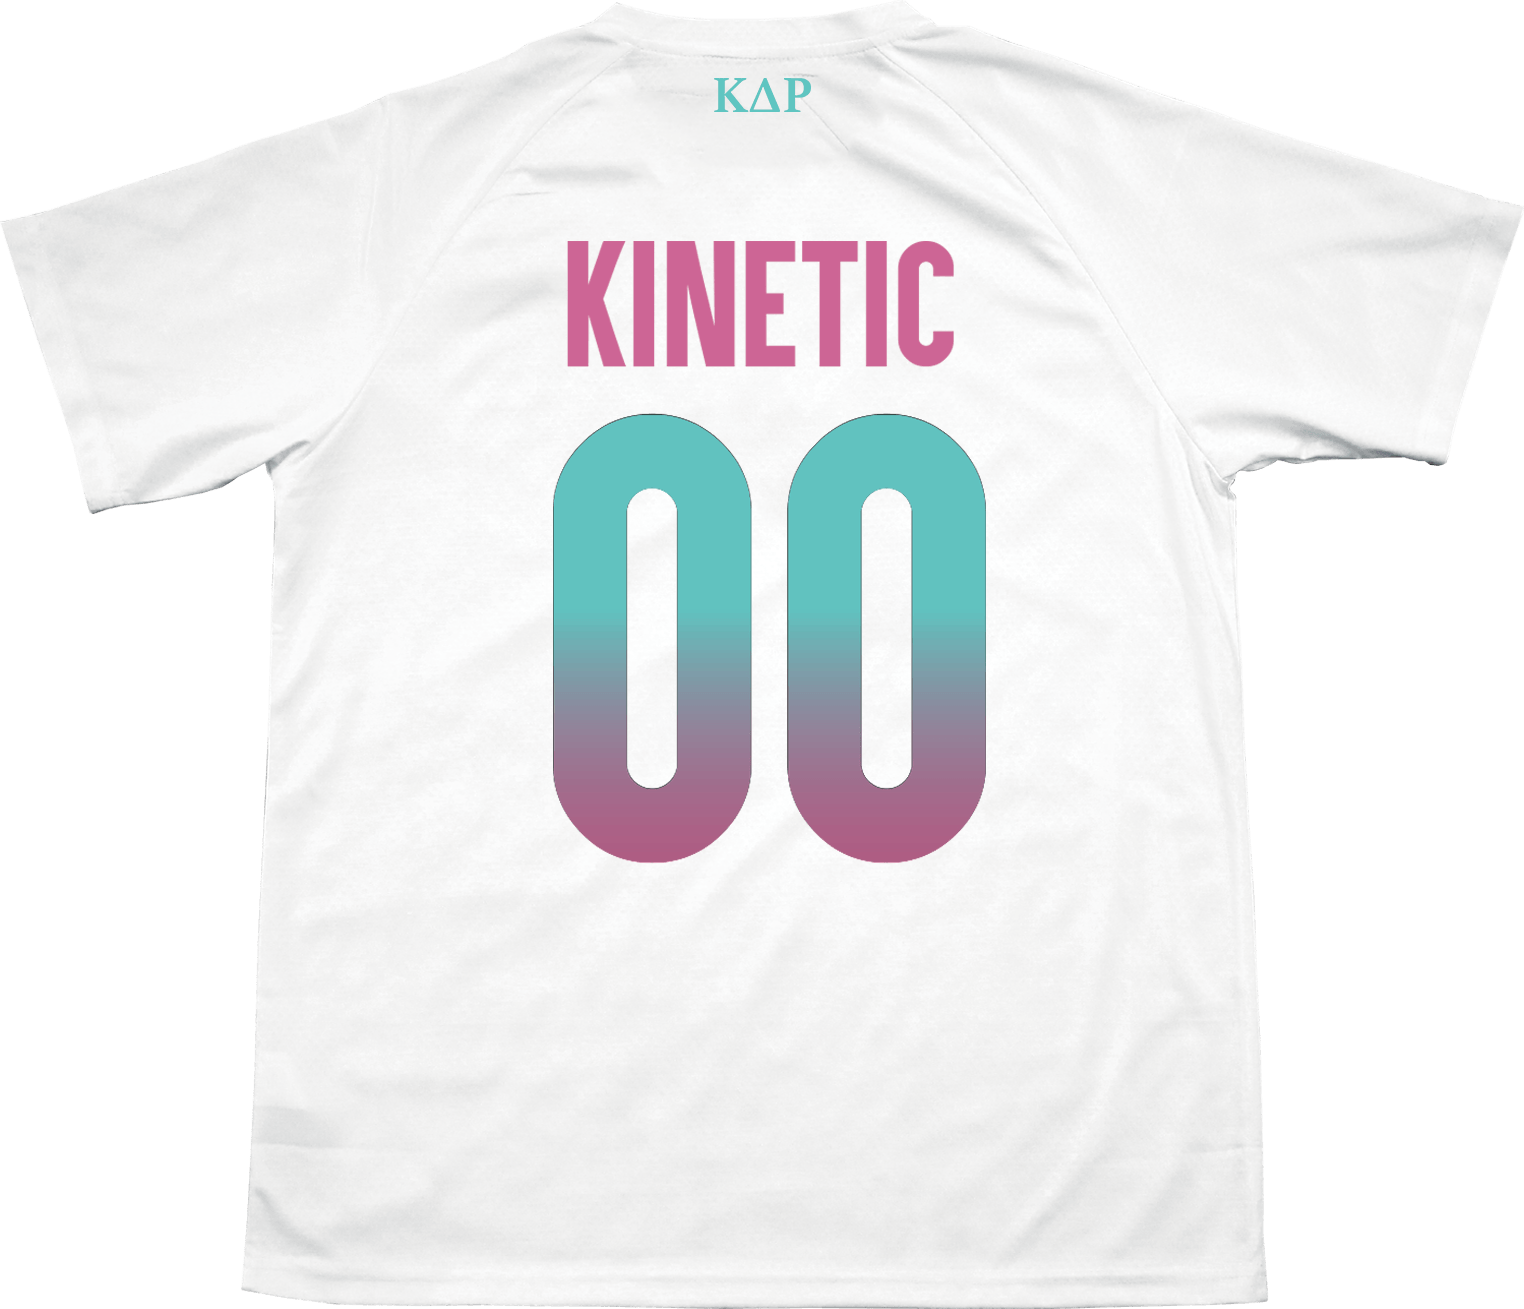 Kappa Delta Rho - White Candy Floss Soccer Jersey - Kinetic Society